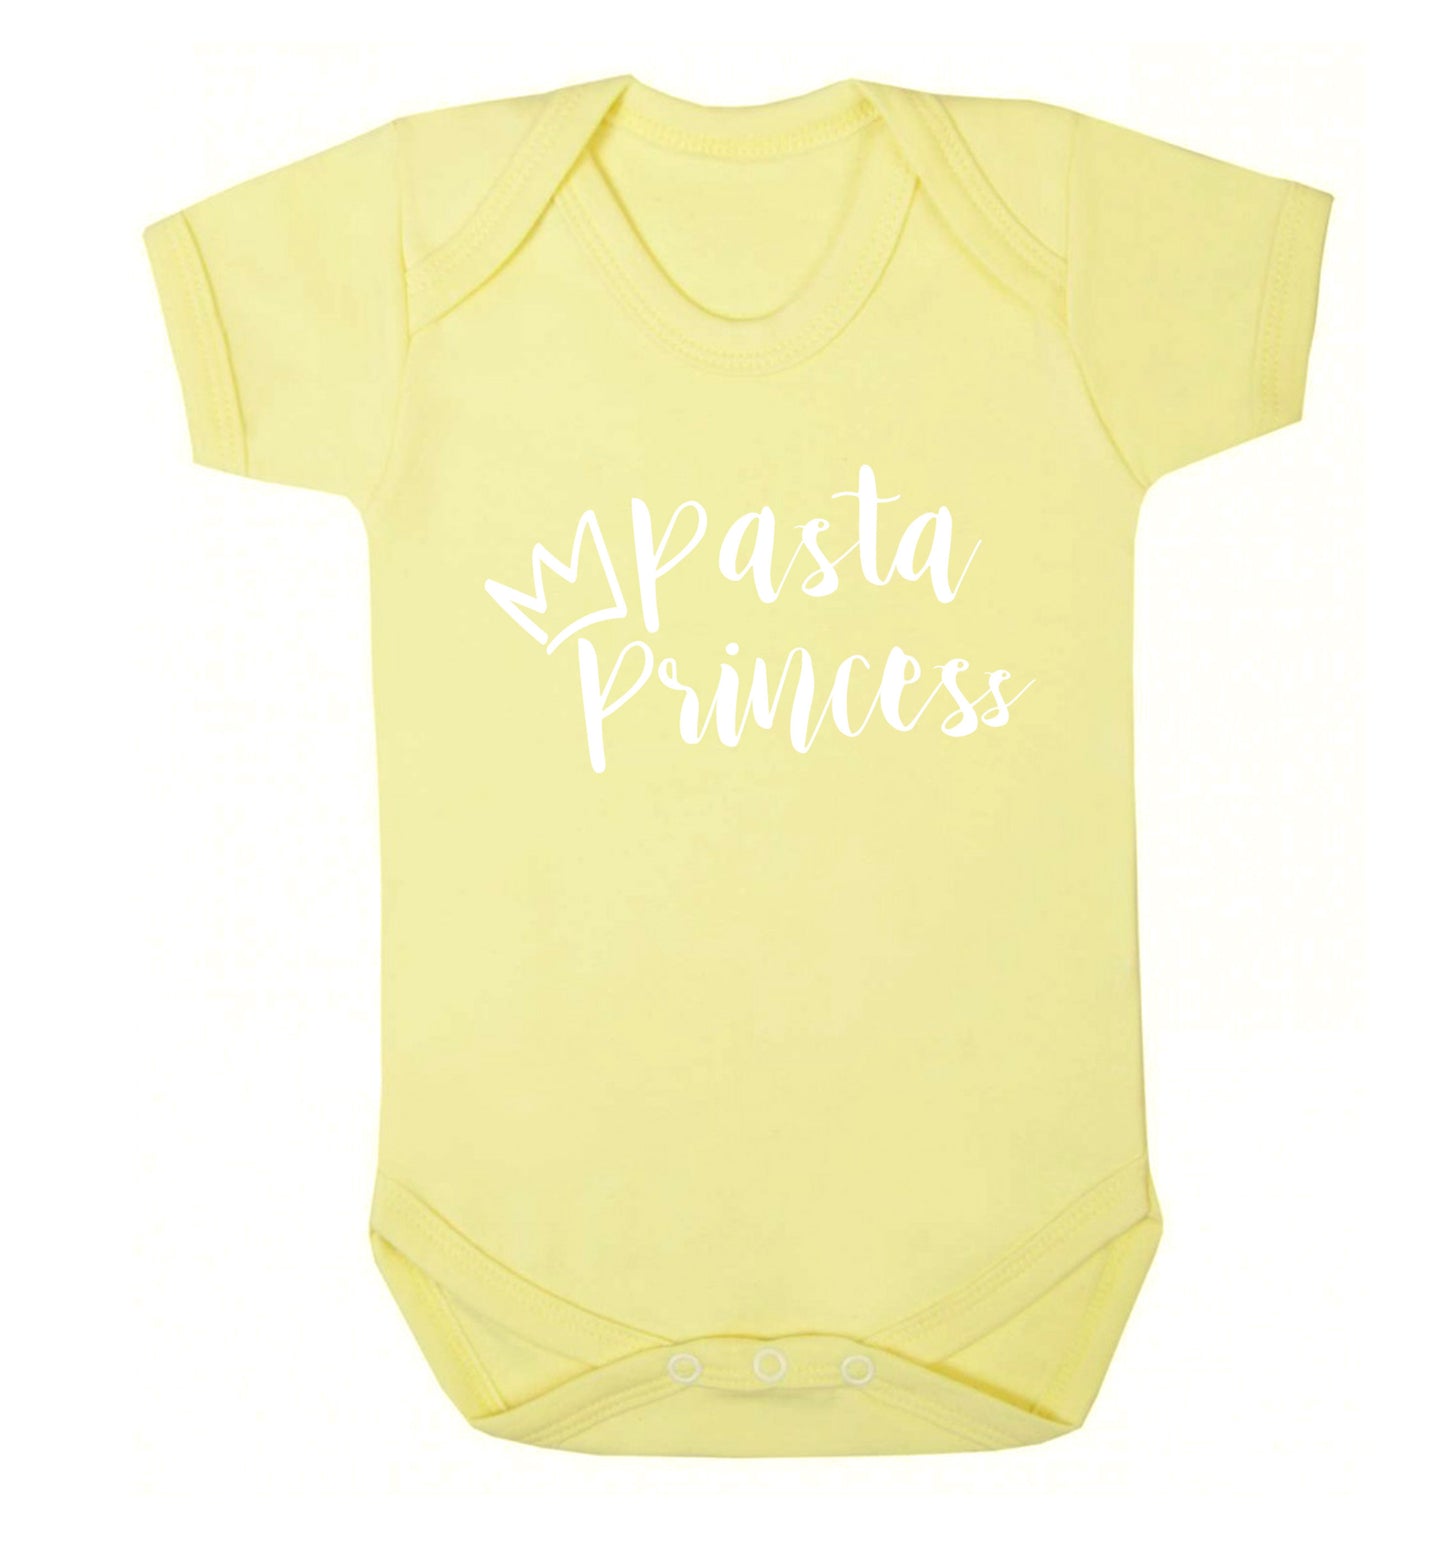 Pasta Princess Baby Vest pale yellow 18-24 months